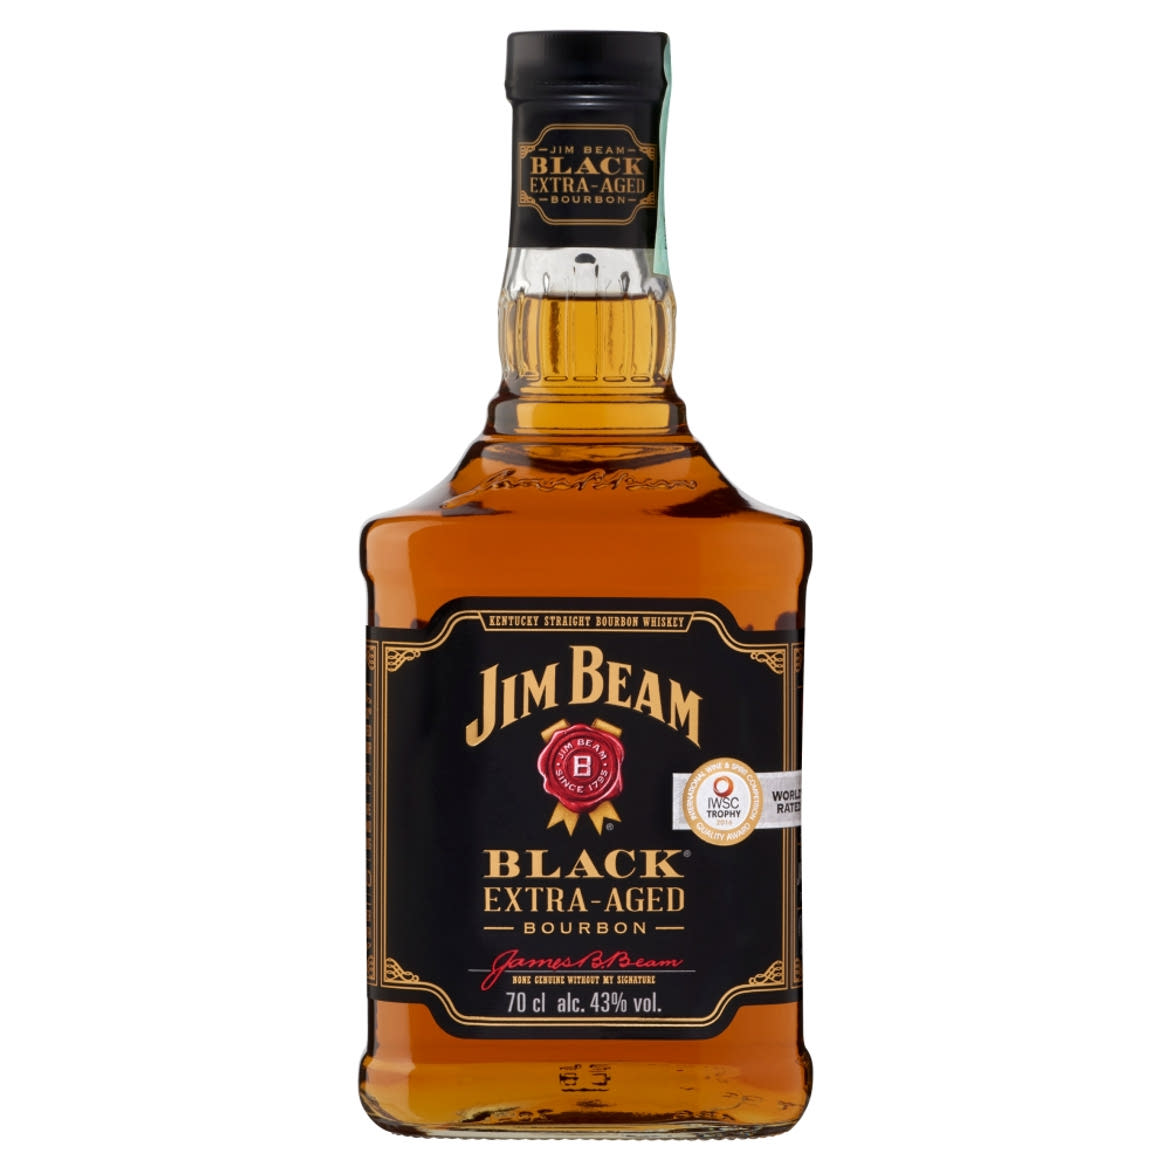 Jim Beam Black Bourbon whiskey 43%